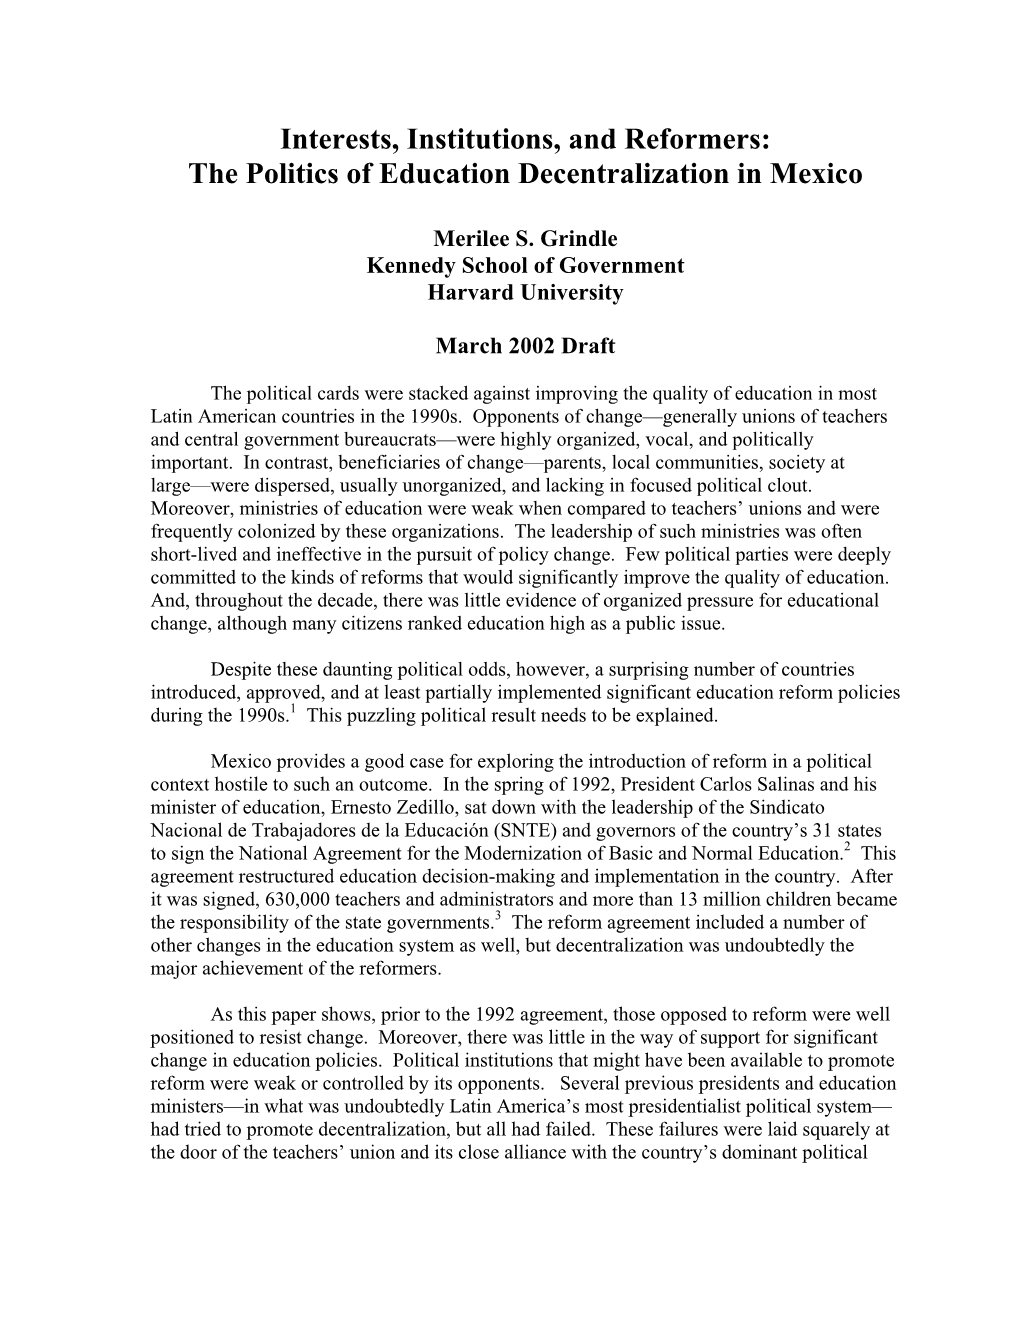 The Politics of Education Decentralization in Mexico